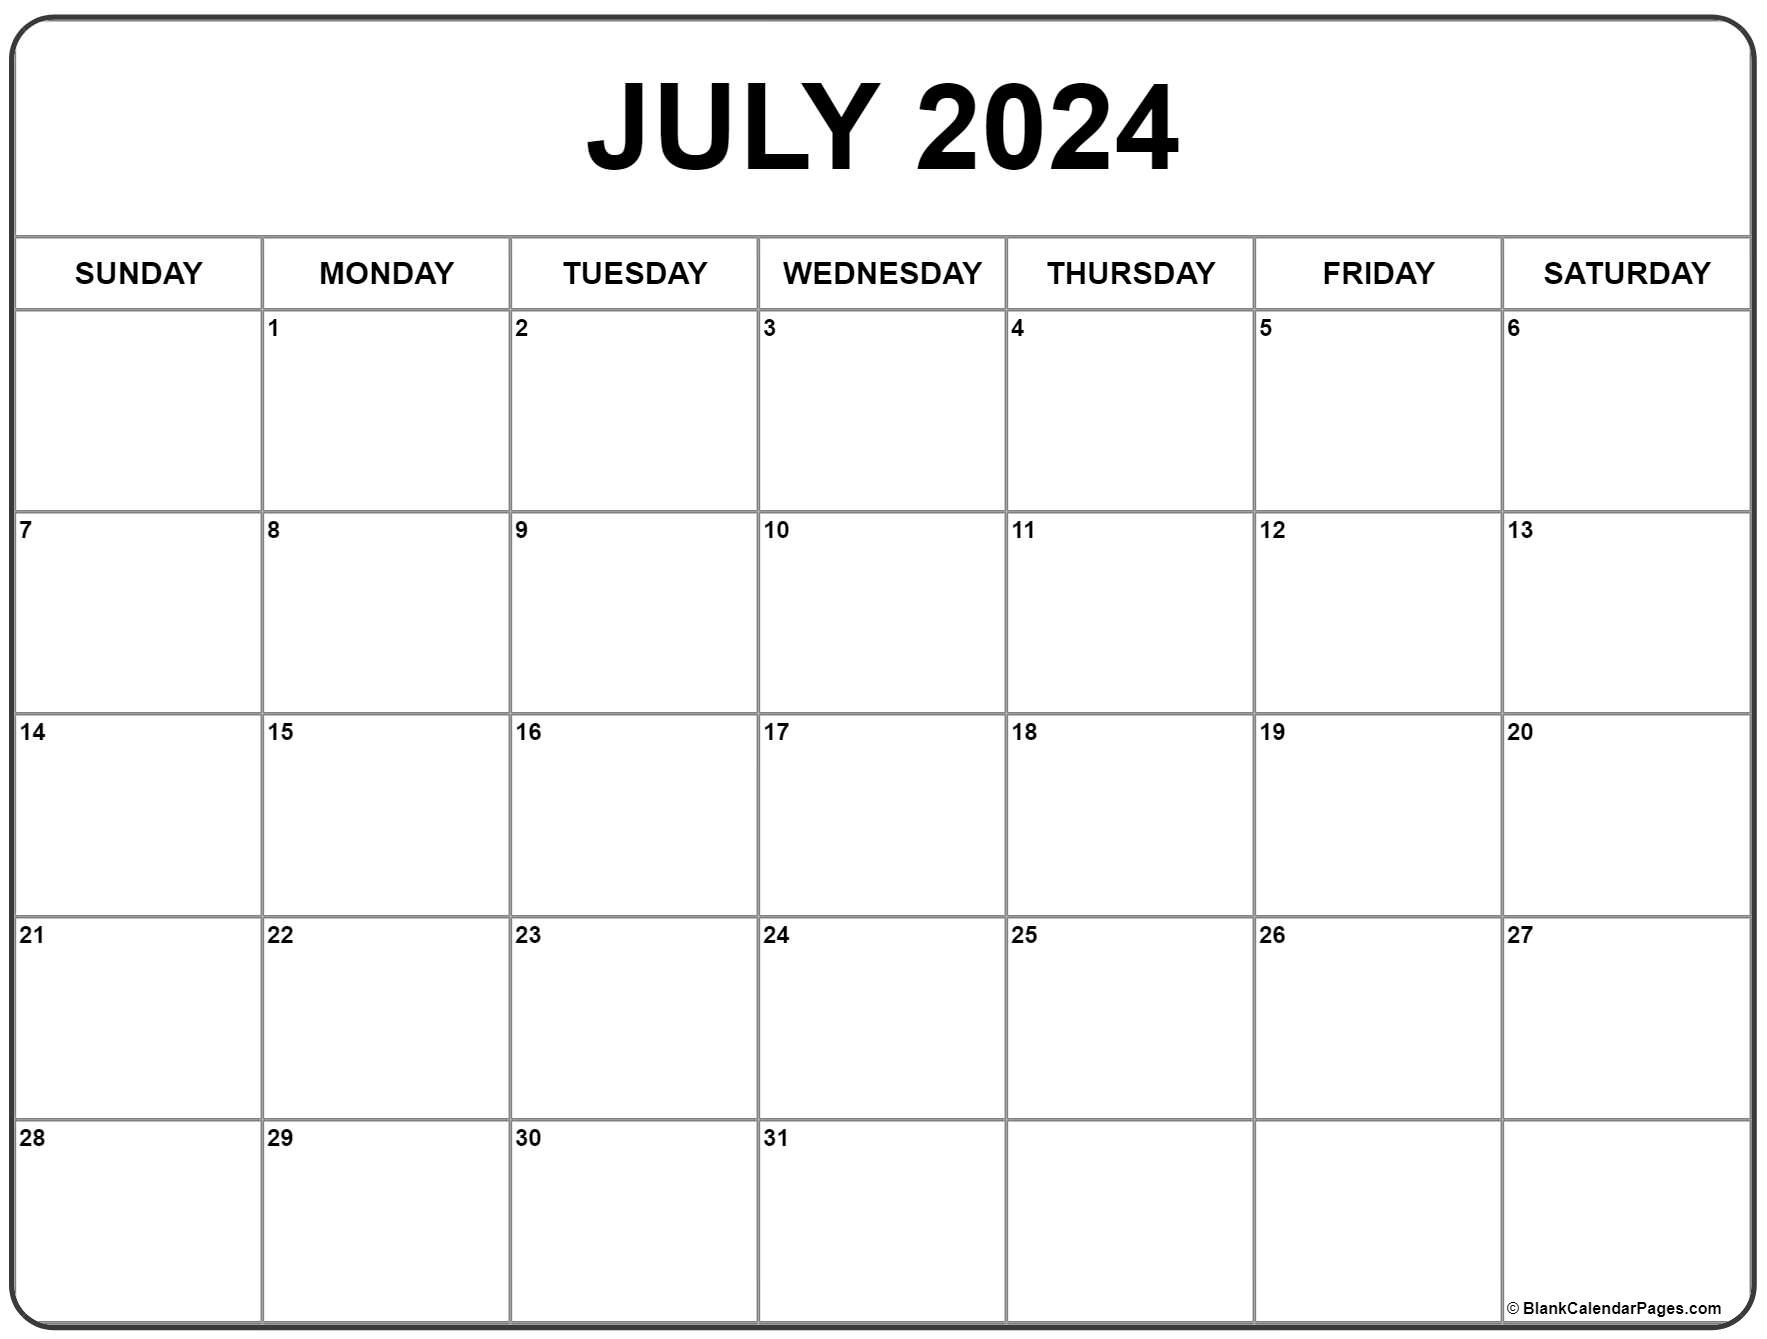 July 2024 Calendar | Free Printable Calendar for Summer Month Calendar 2024 Printable